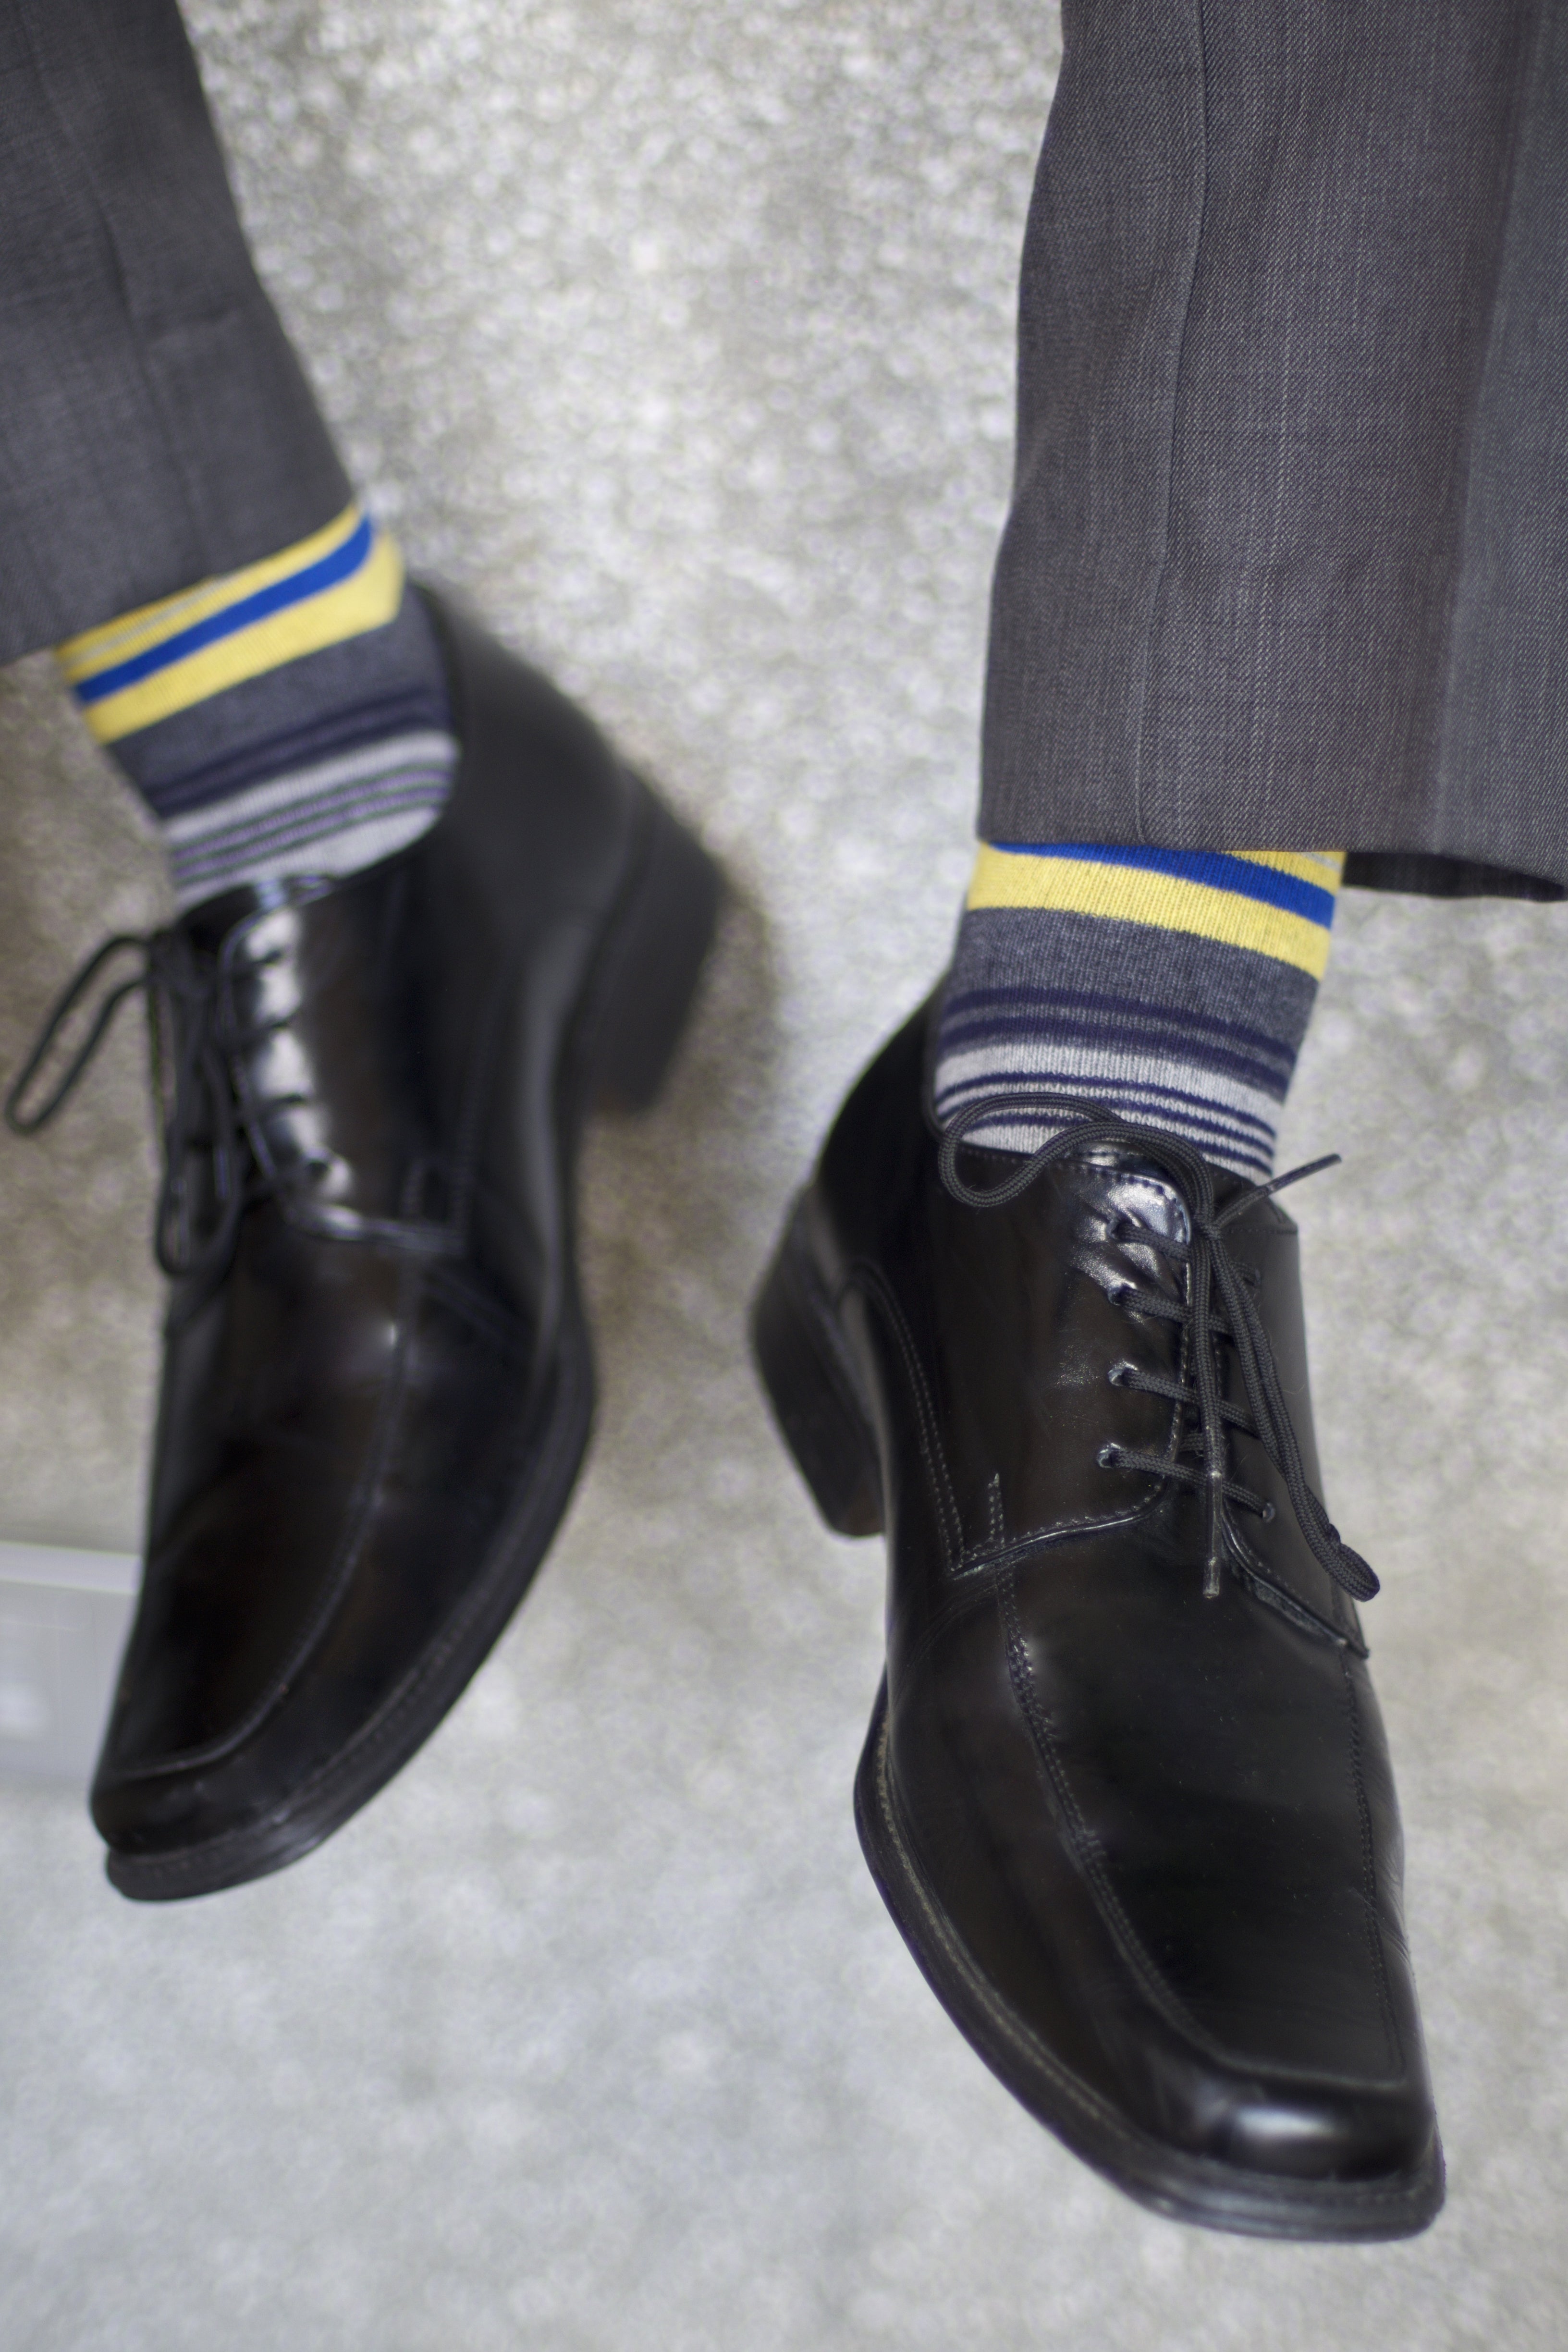 light grey blue grey and yellow striped over the calf dress socks, grey dress pants, black dress shoes